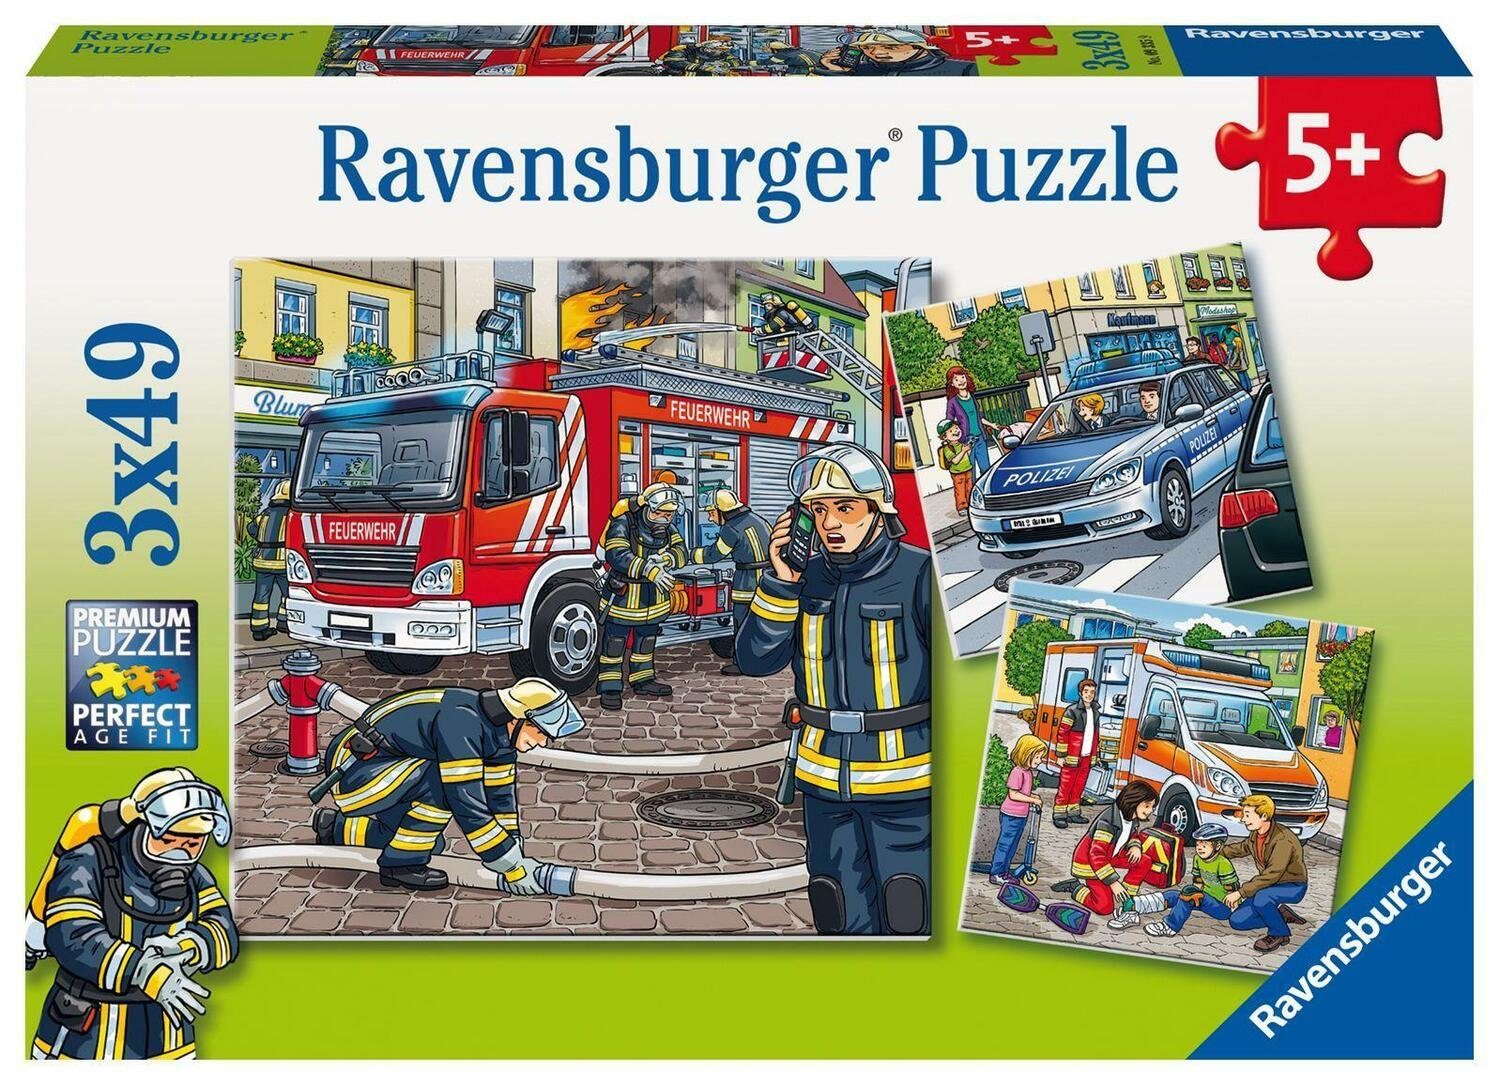 Ravensburger Puzzle Helfer in der Not. Puzzle 3 x 49 Teile, 49 Puzzleteile